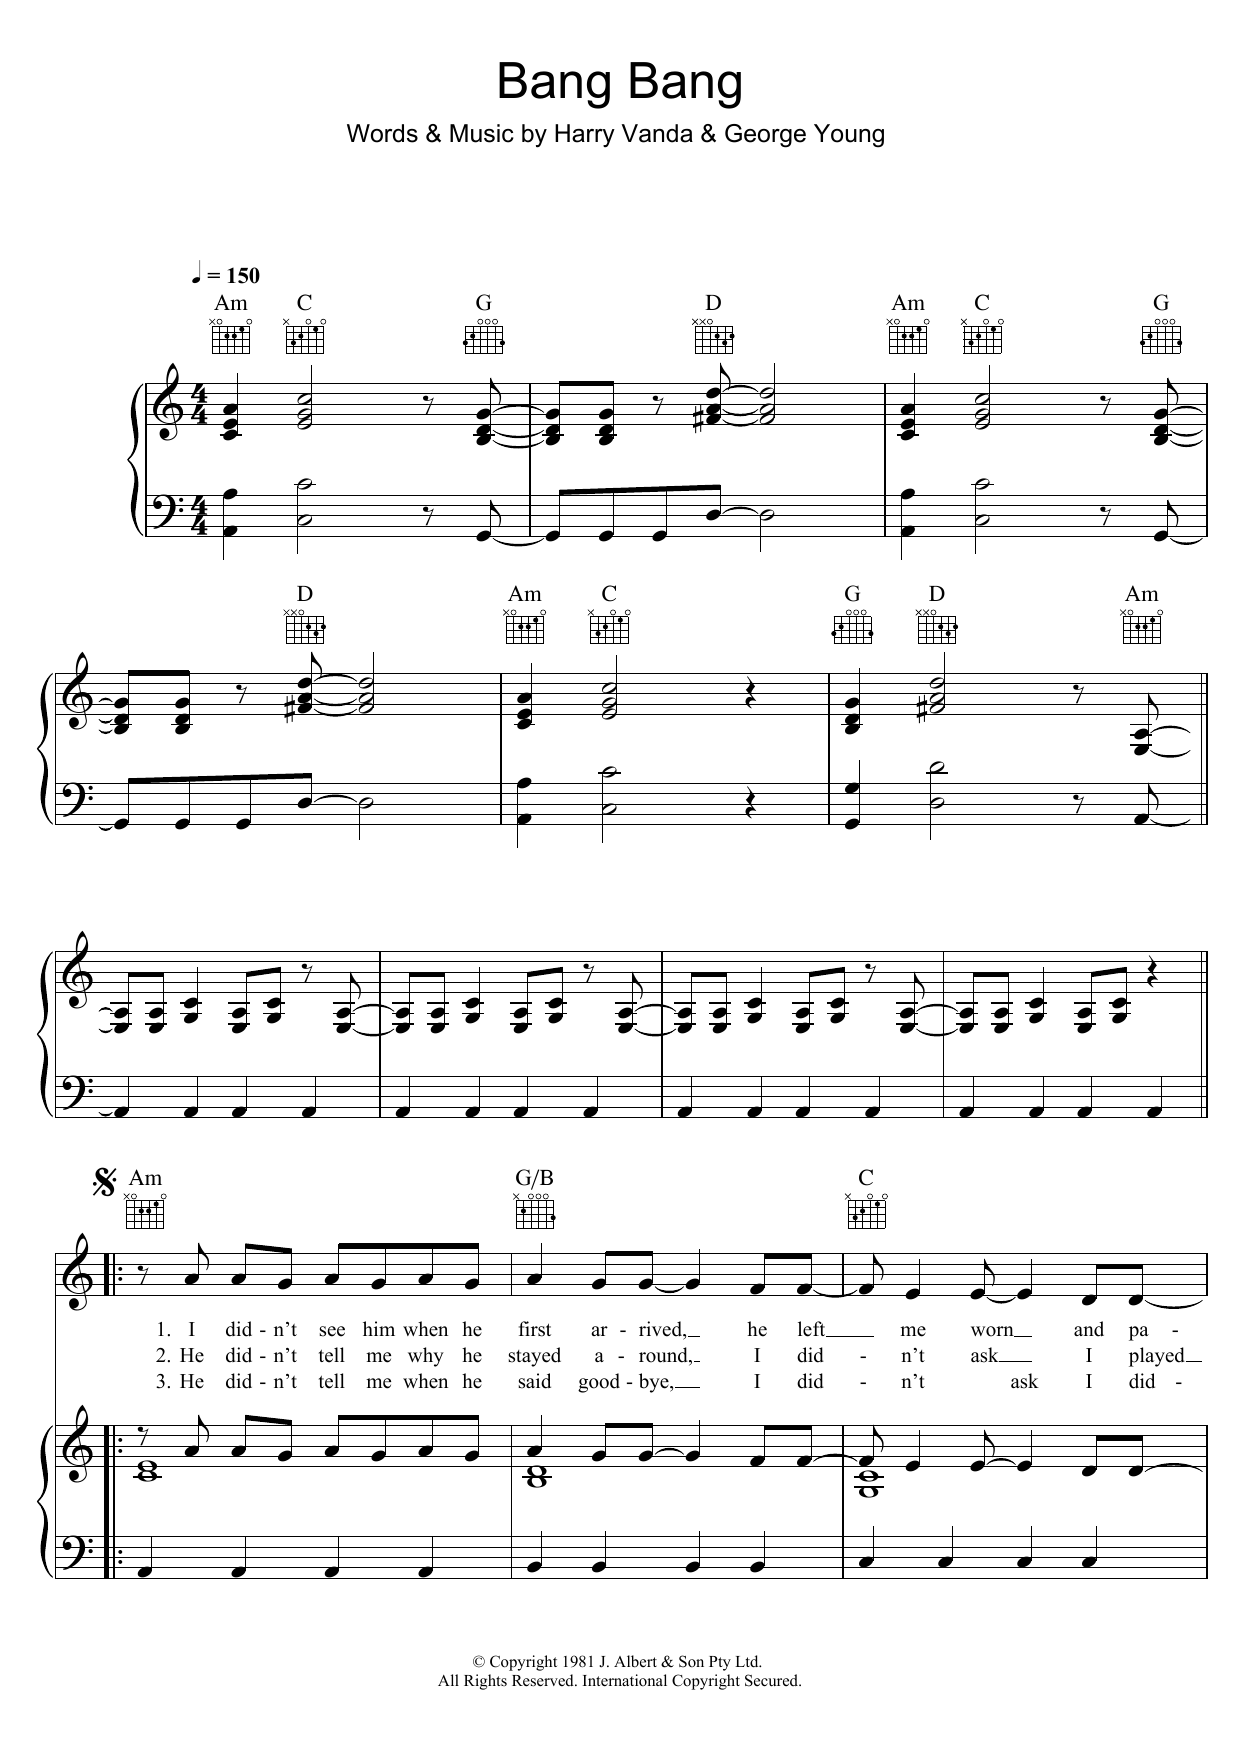 Download Cheetah Bang Bang Sheet Music and learn how to play Piano, Vocal & Guitar (Right-Hand Melody) PDF digital score in minutes